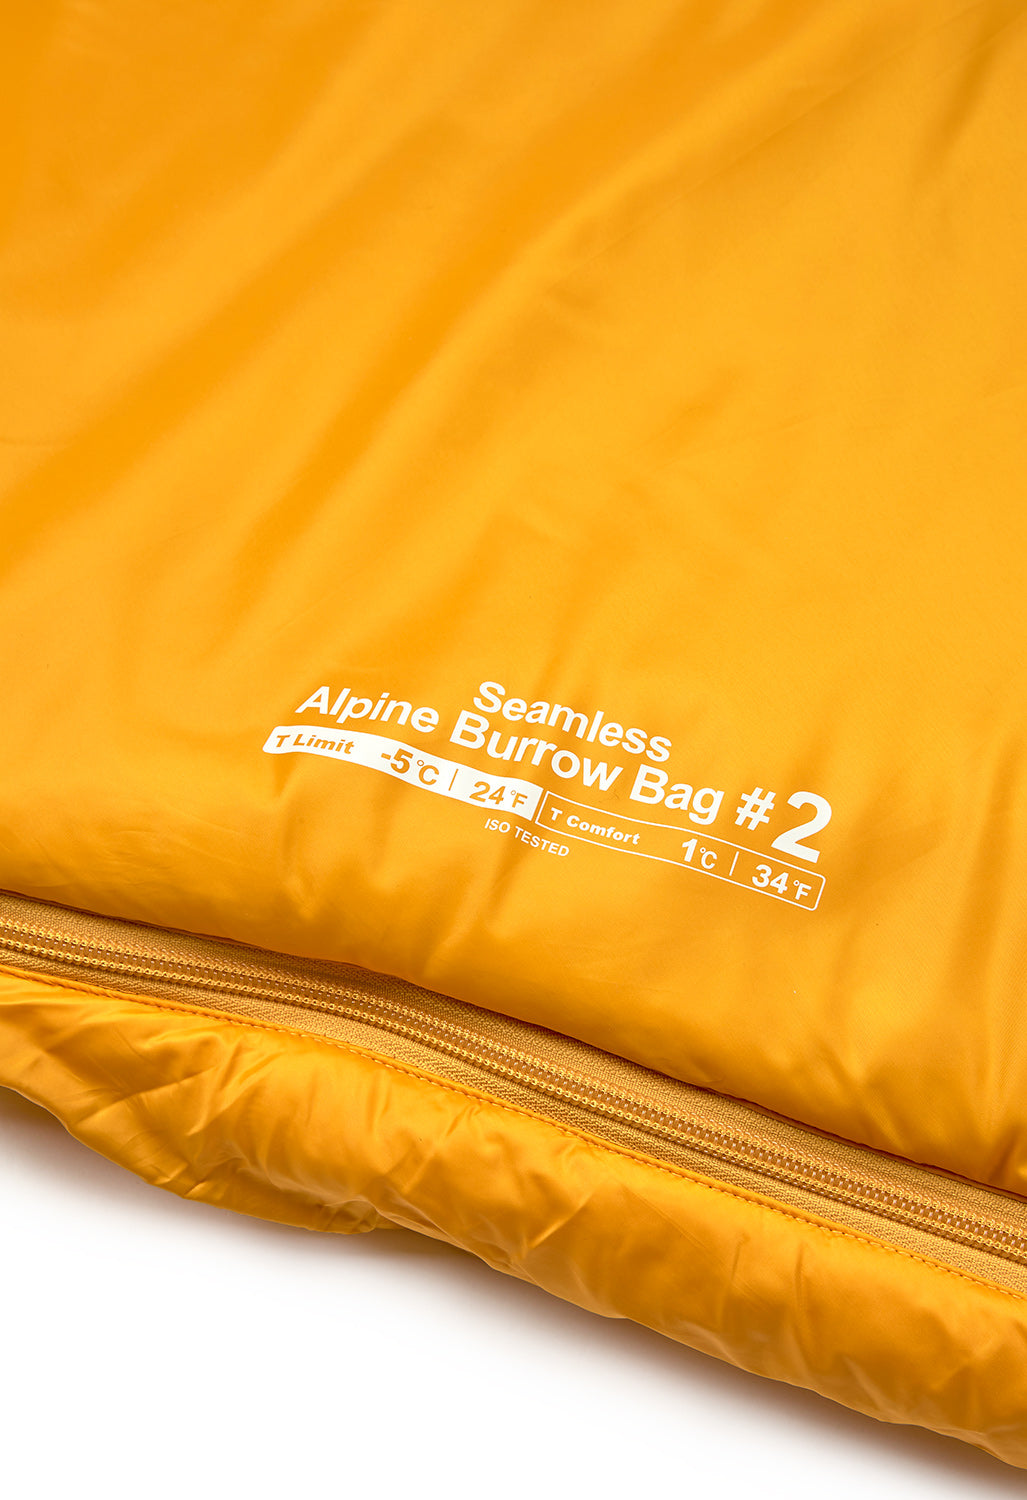 Montbell Seemless Alpine Burrow Bag #2 Sleeping Bag - Sunflower